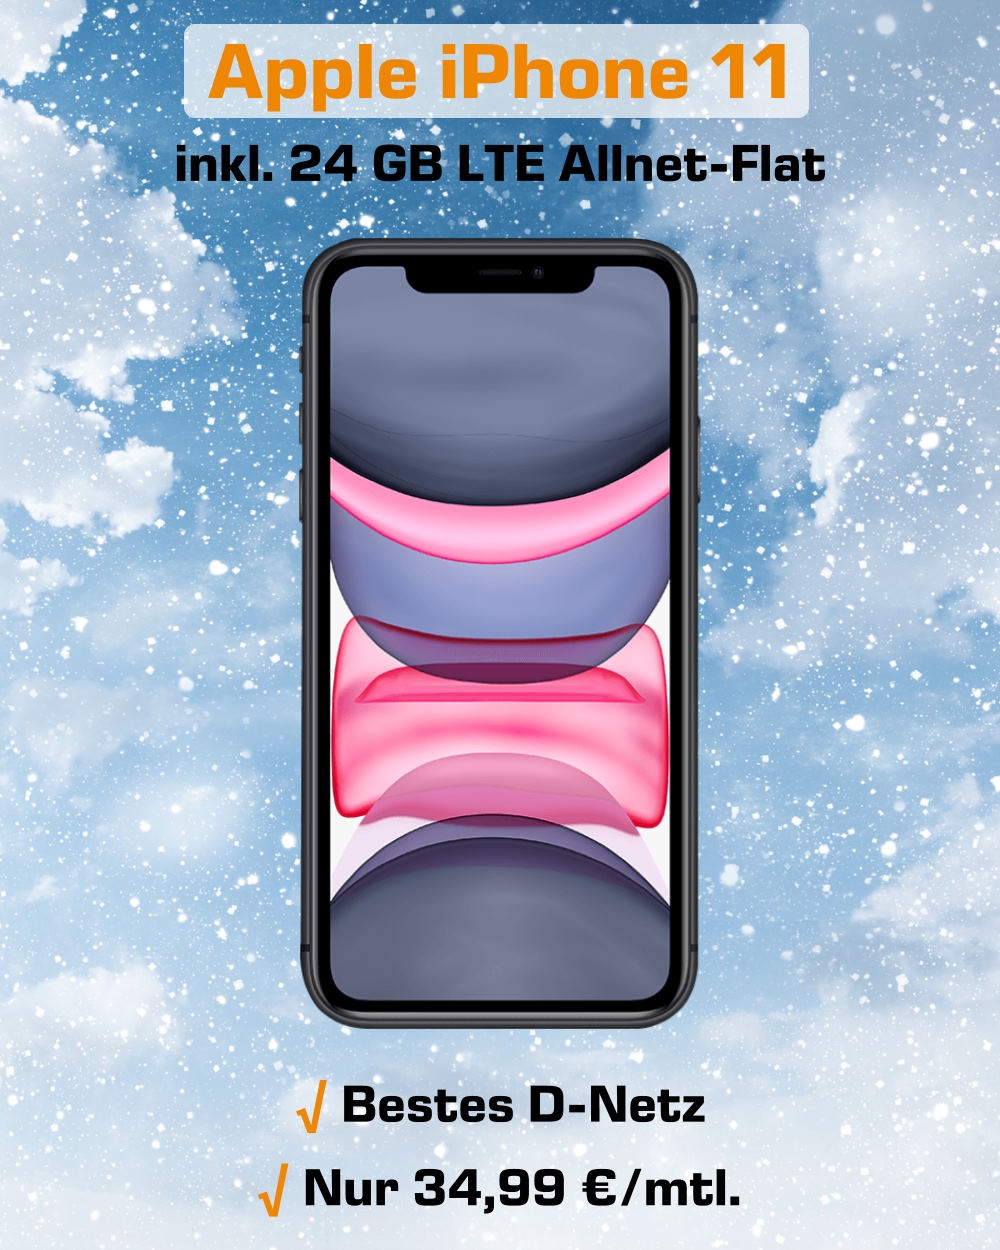 iPhone 11 Vertrag mit 24 GB LTE Allnet-Flat